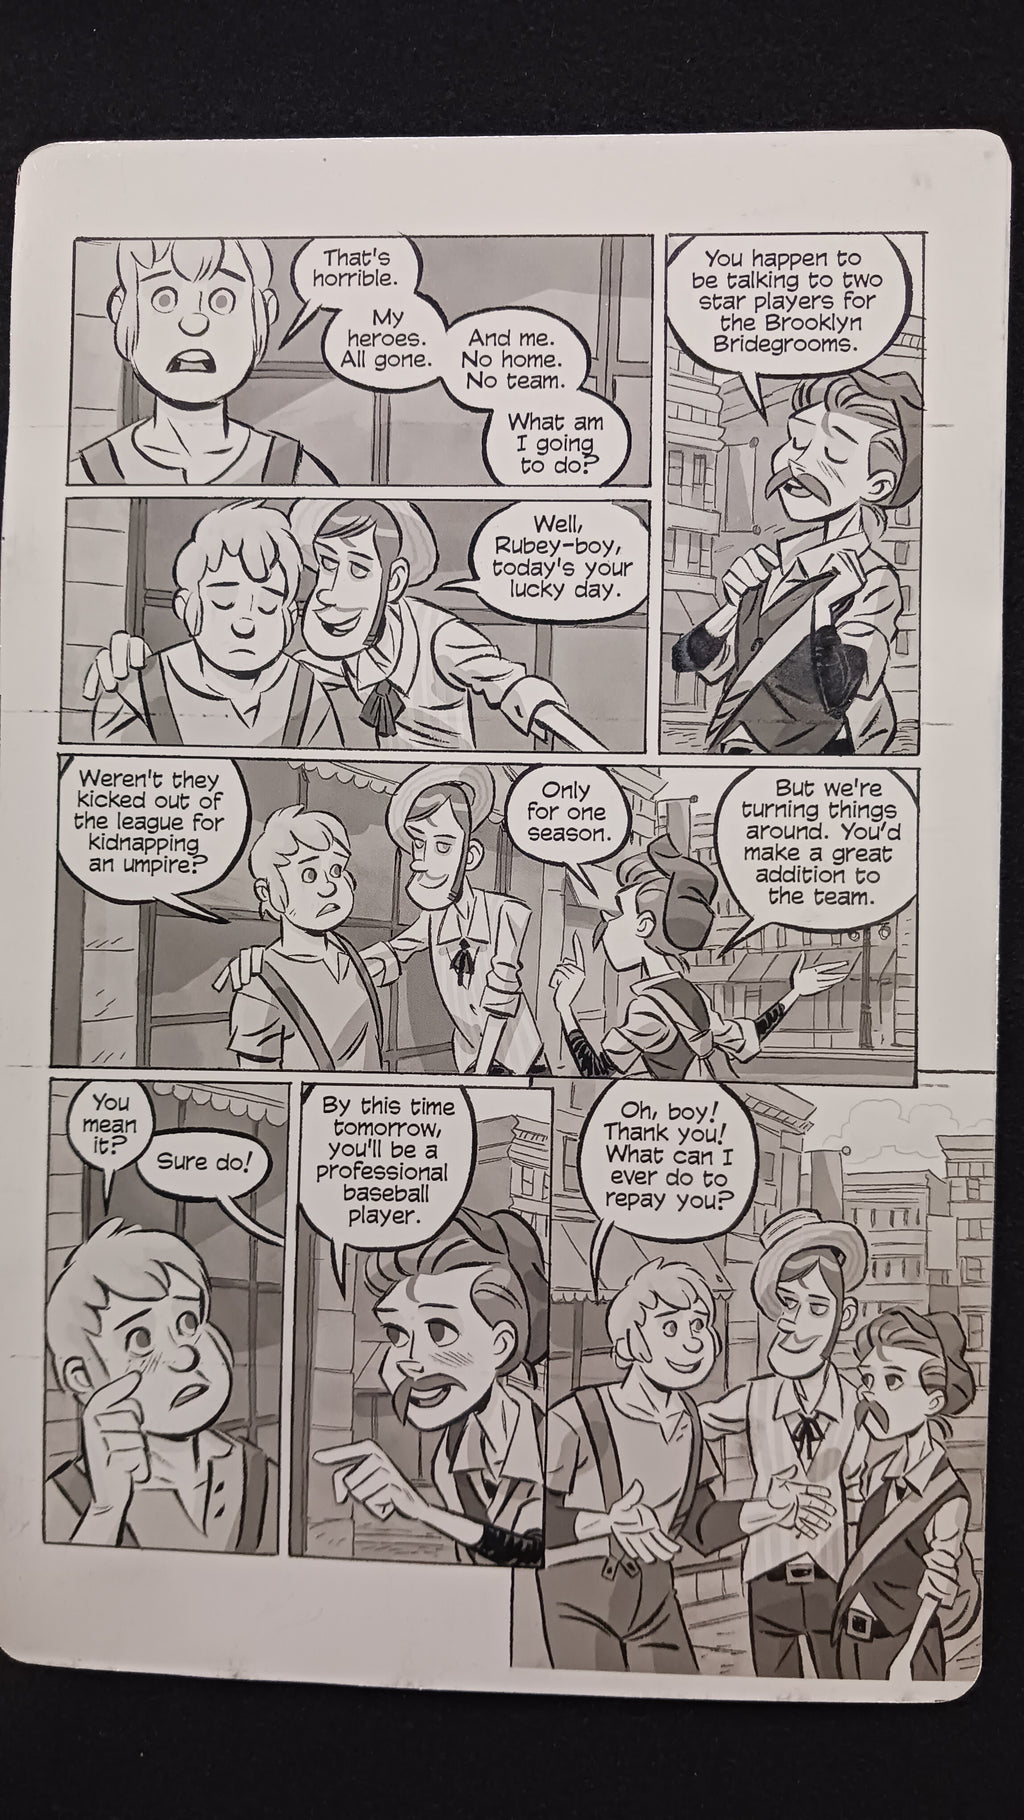 Bush Leaguers #1 - Page 28  - PRESSWORKS - Comic Art - Printer Plate - Black